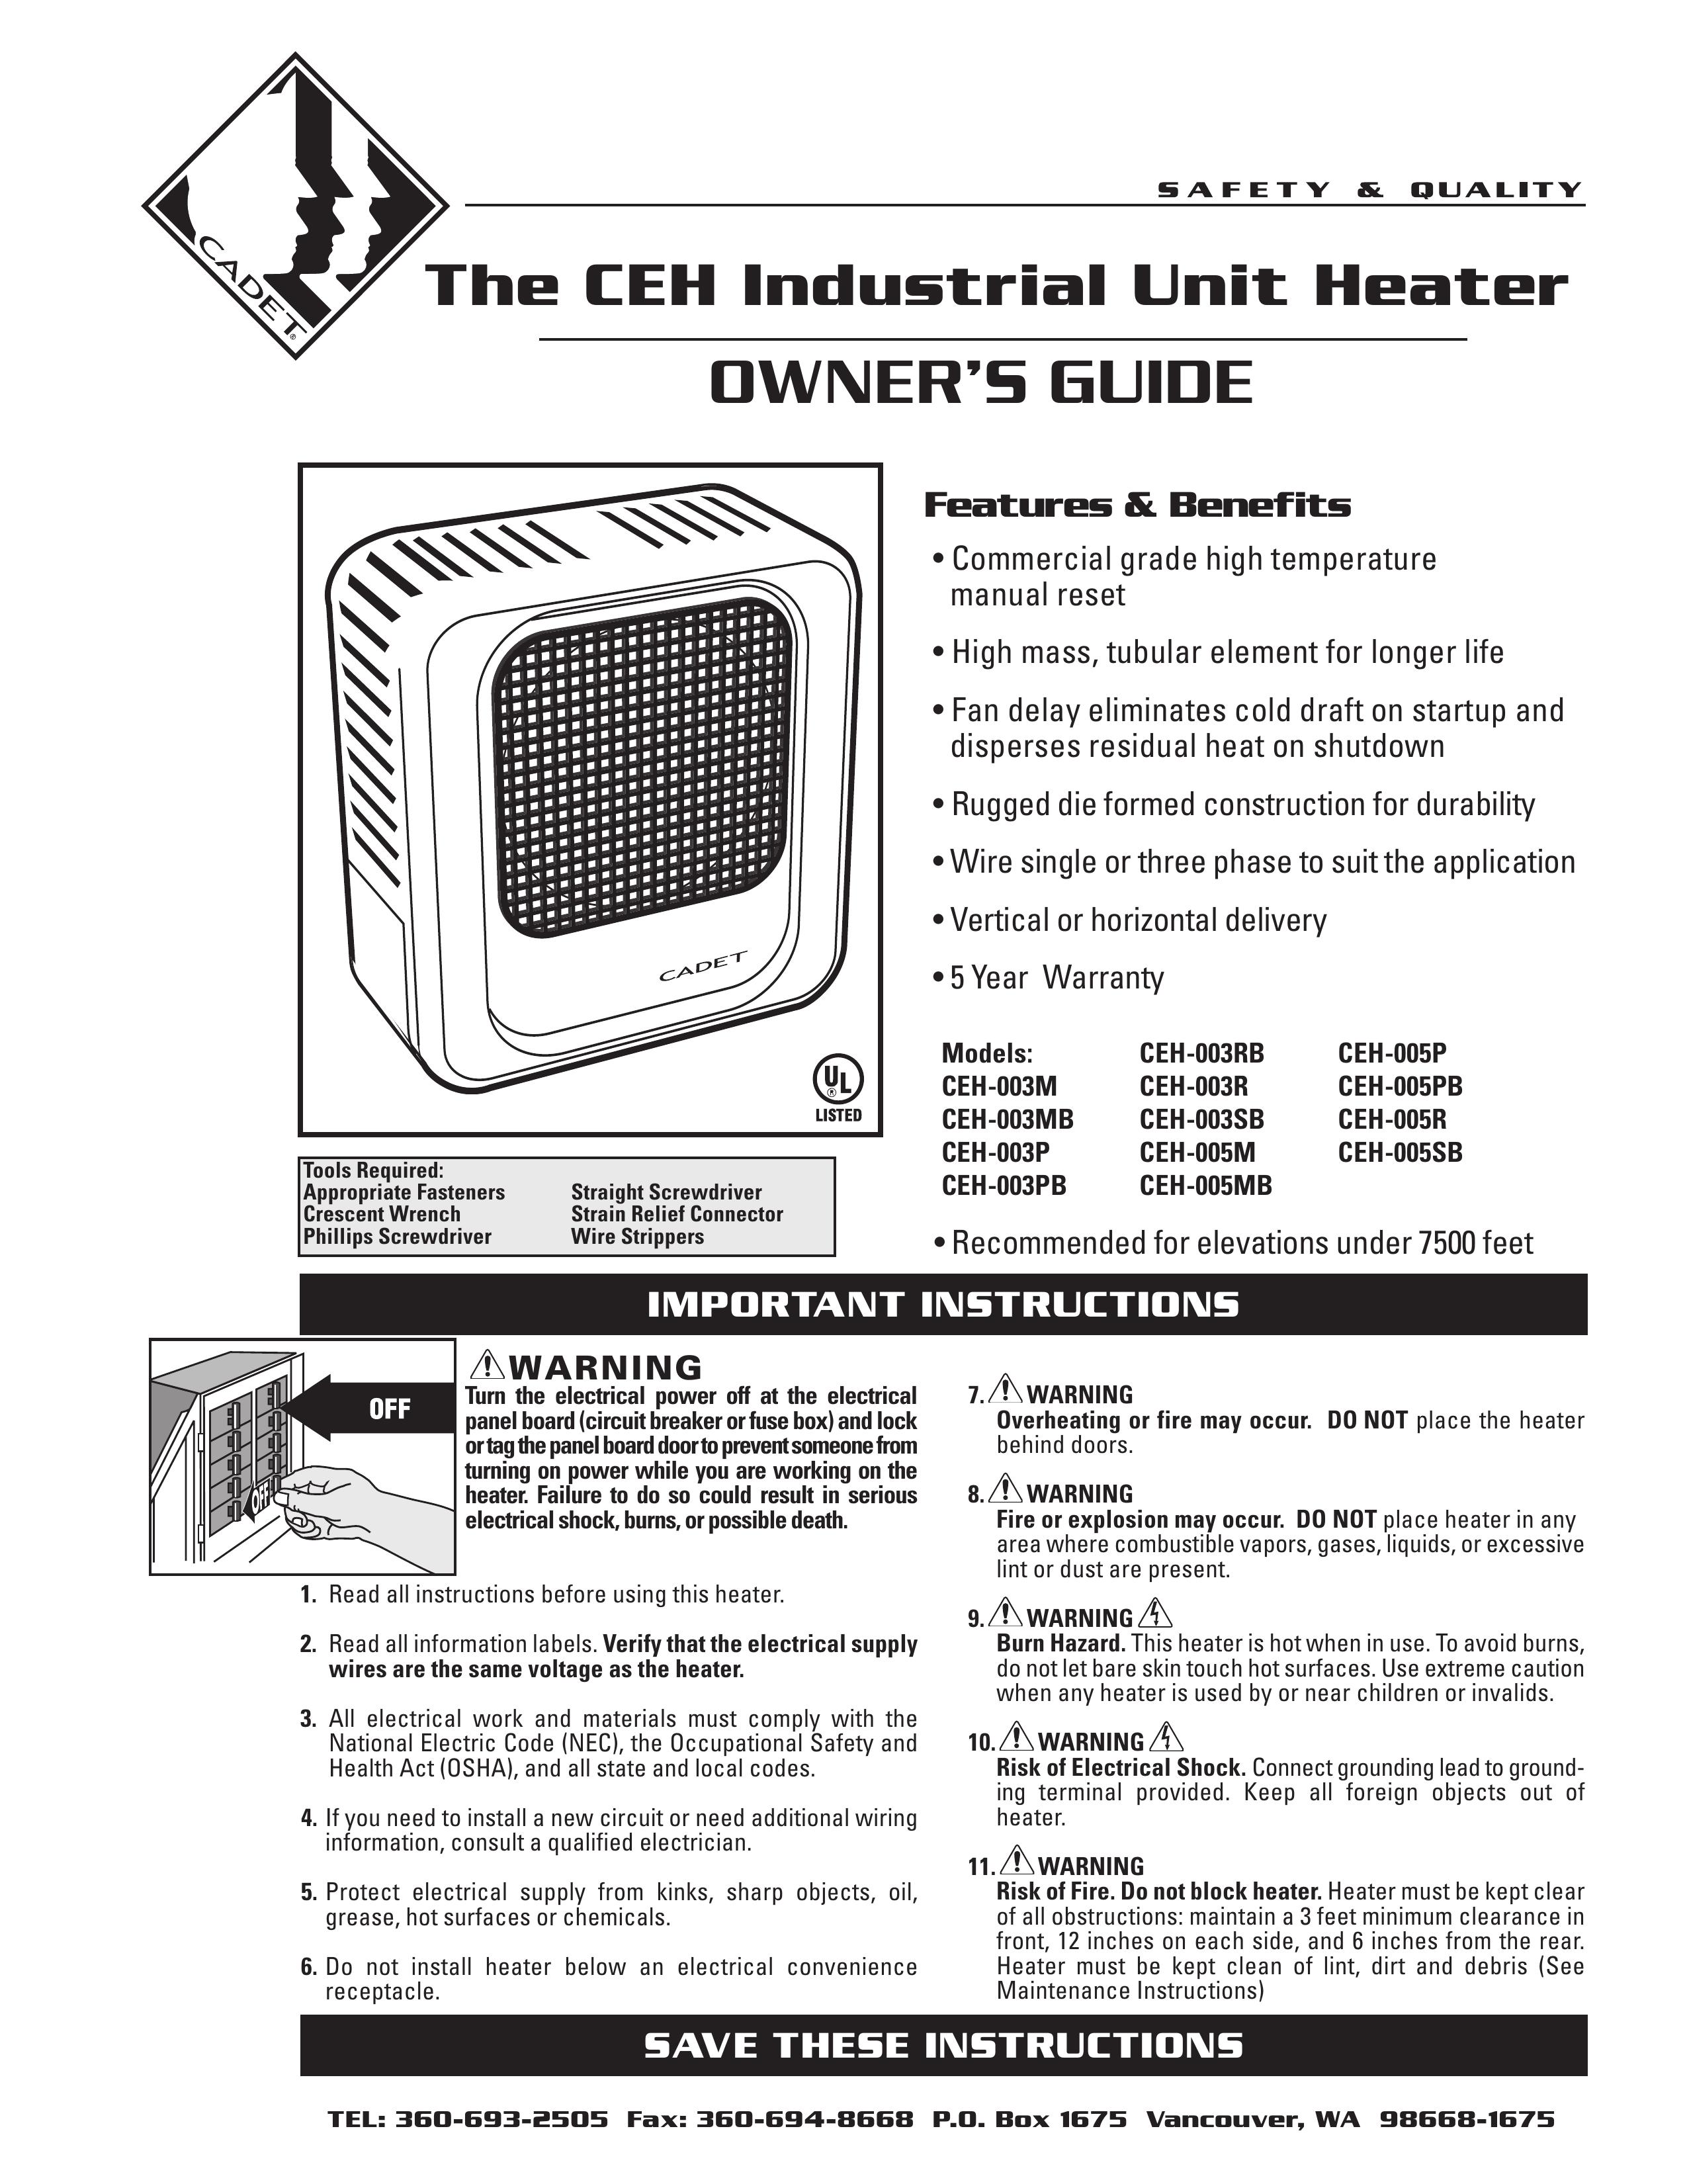 Cadet CEH-005PB Patio Heater User Manual